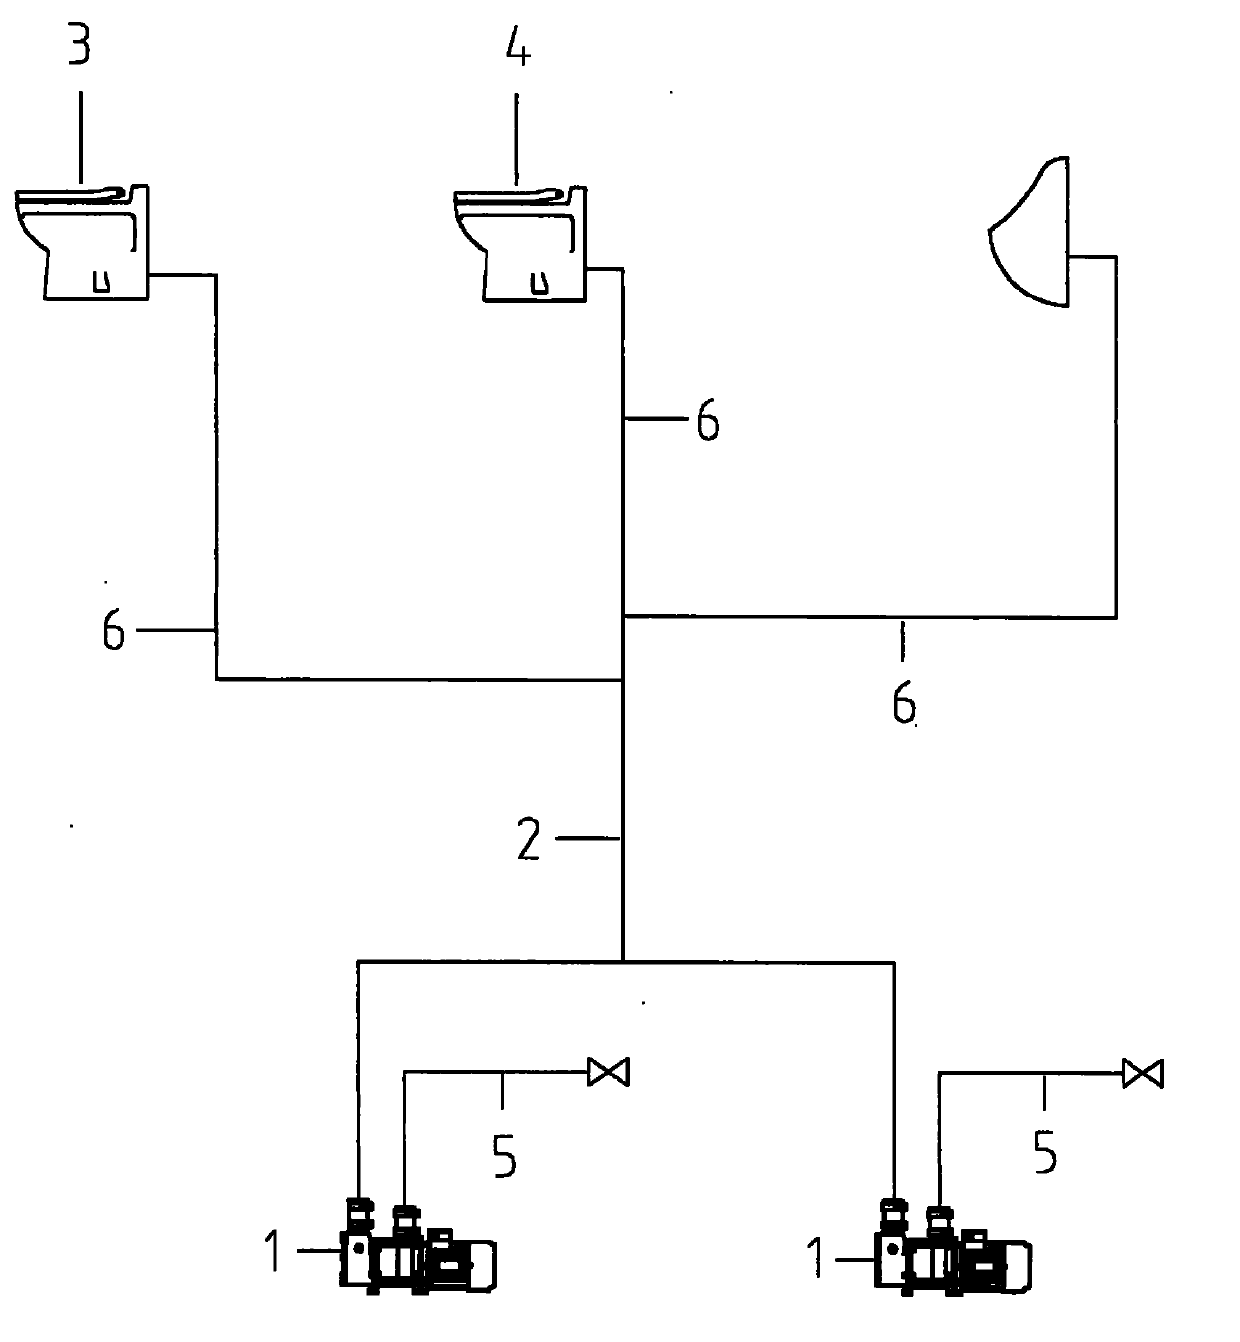 Method for controlling the vacuum generator in a vacuum sewage system